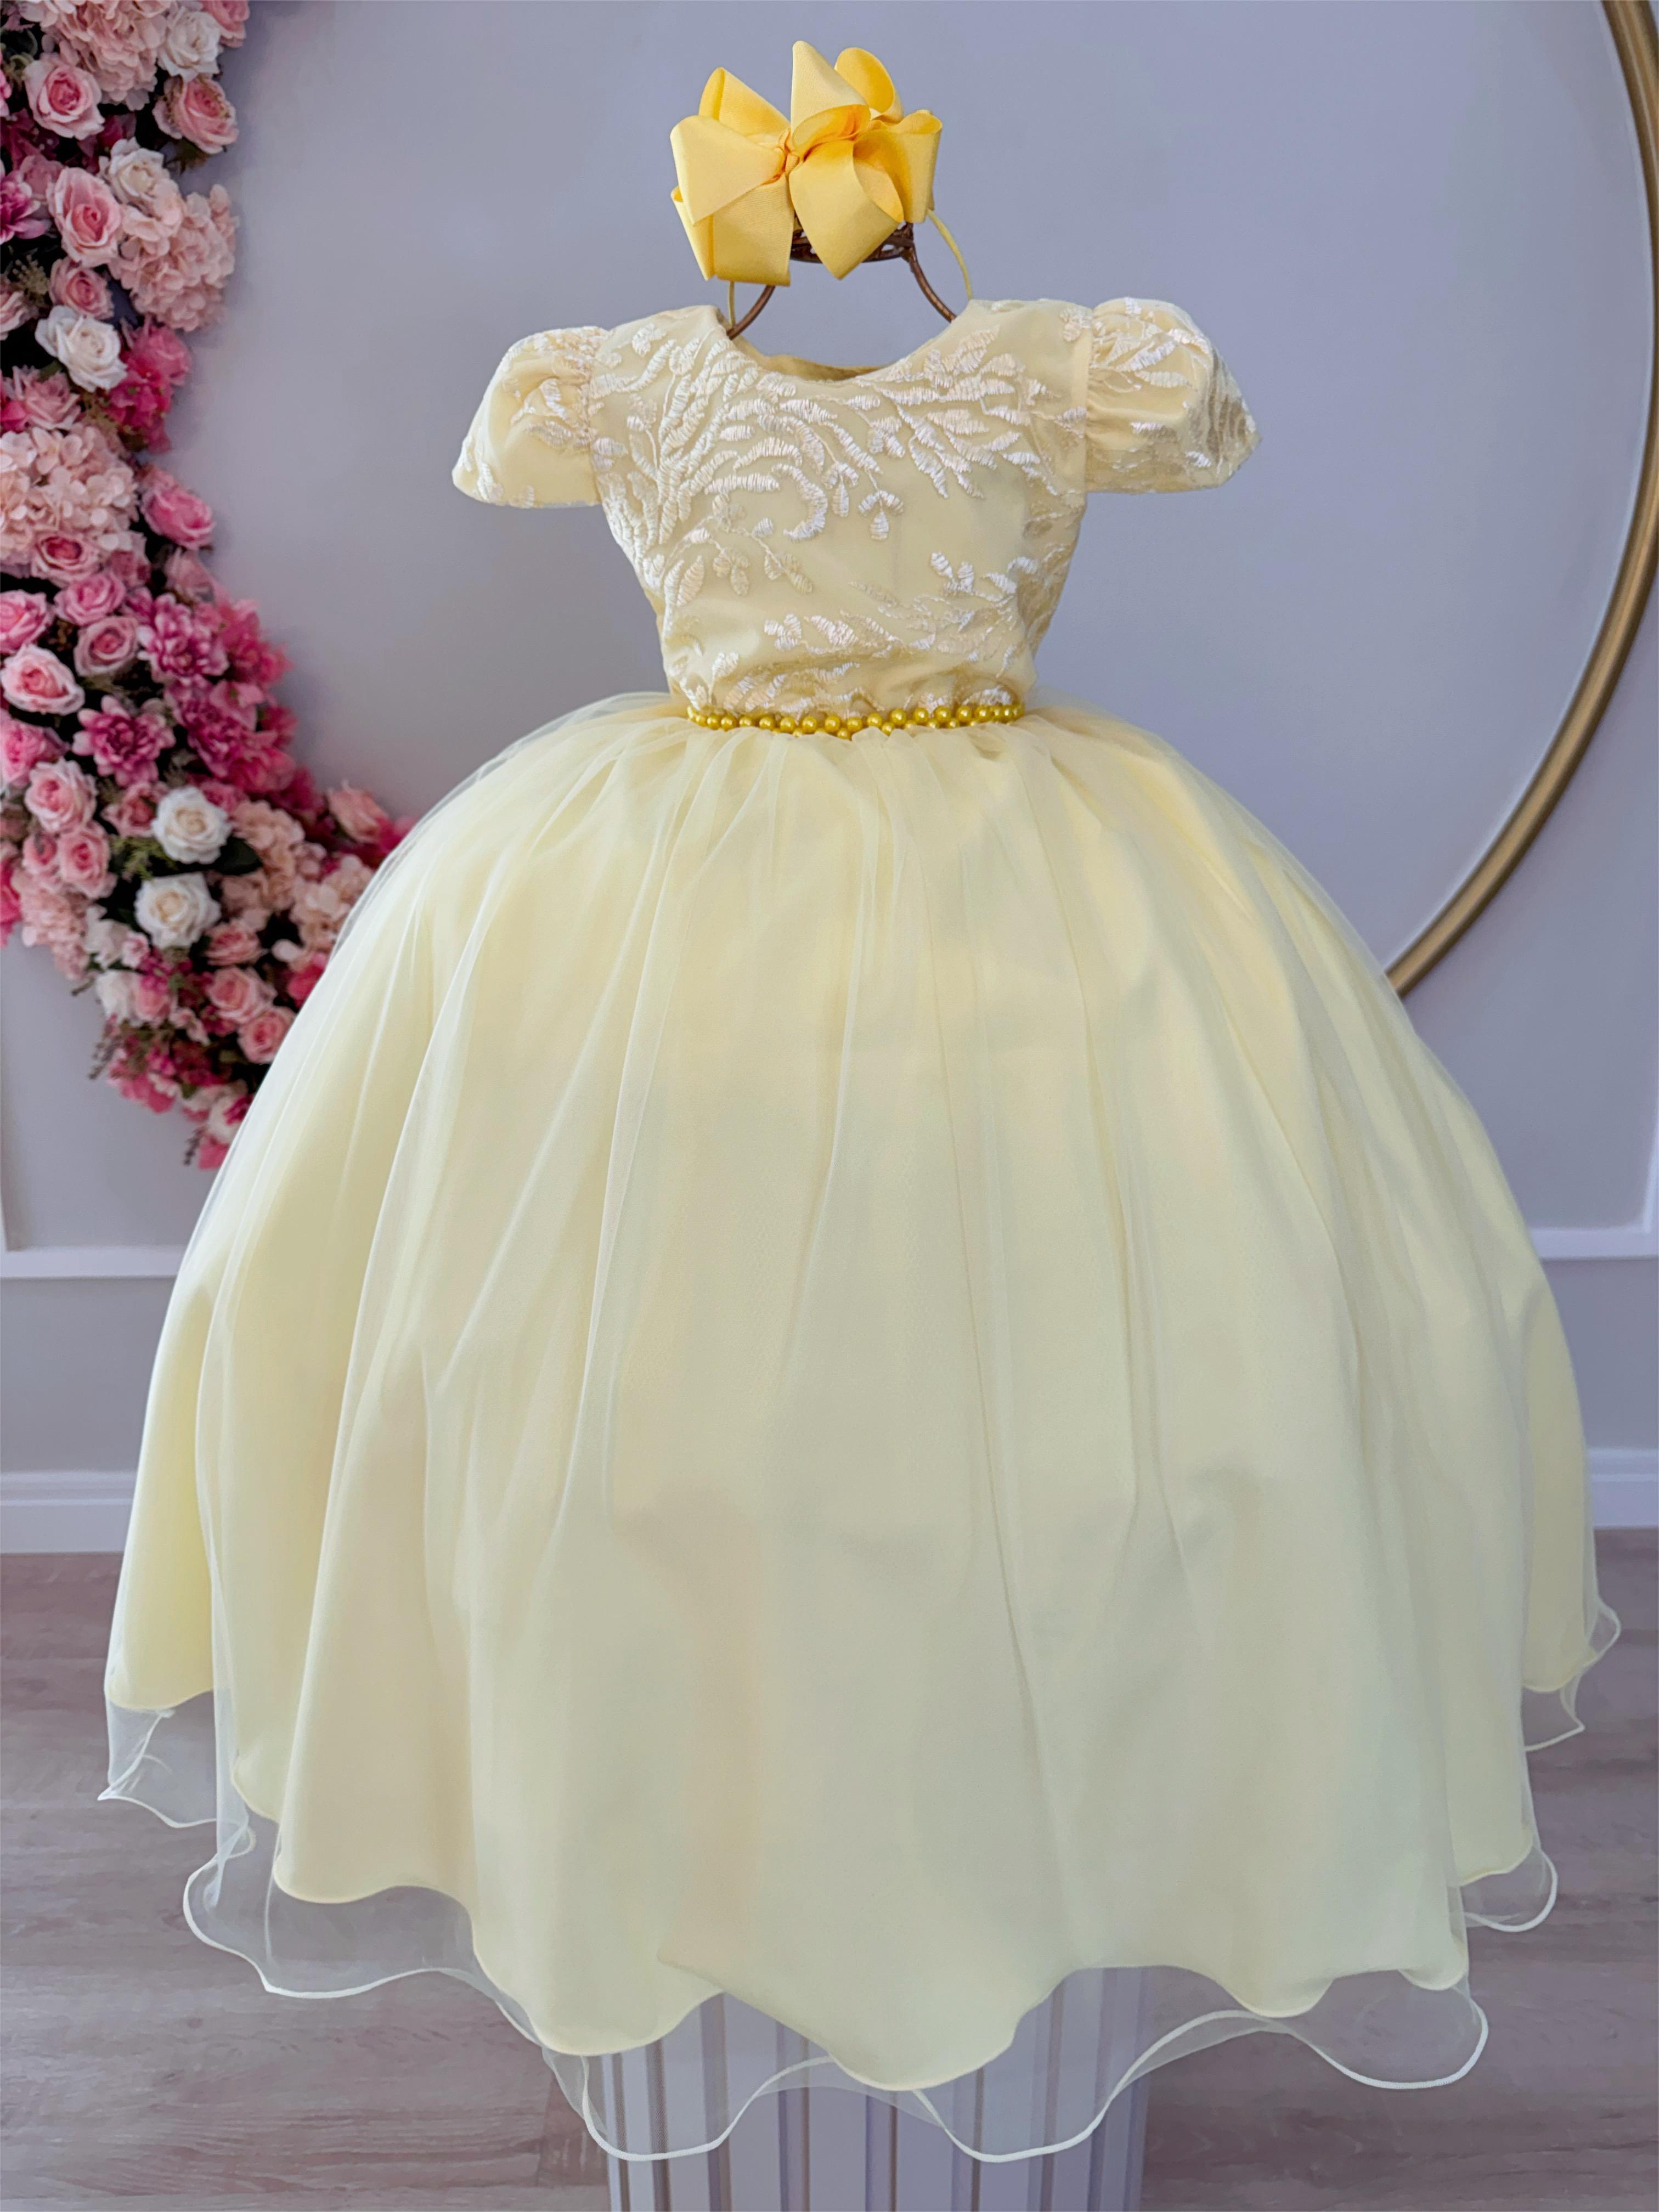 Vestido Infantil Amarelo Damas Luxo C/ Renda e Pérolas